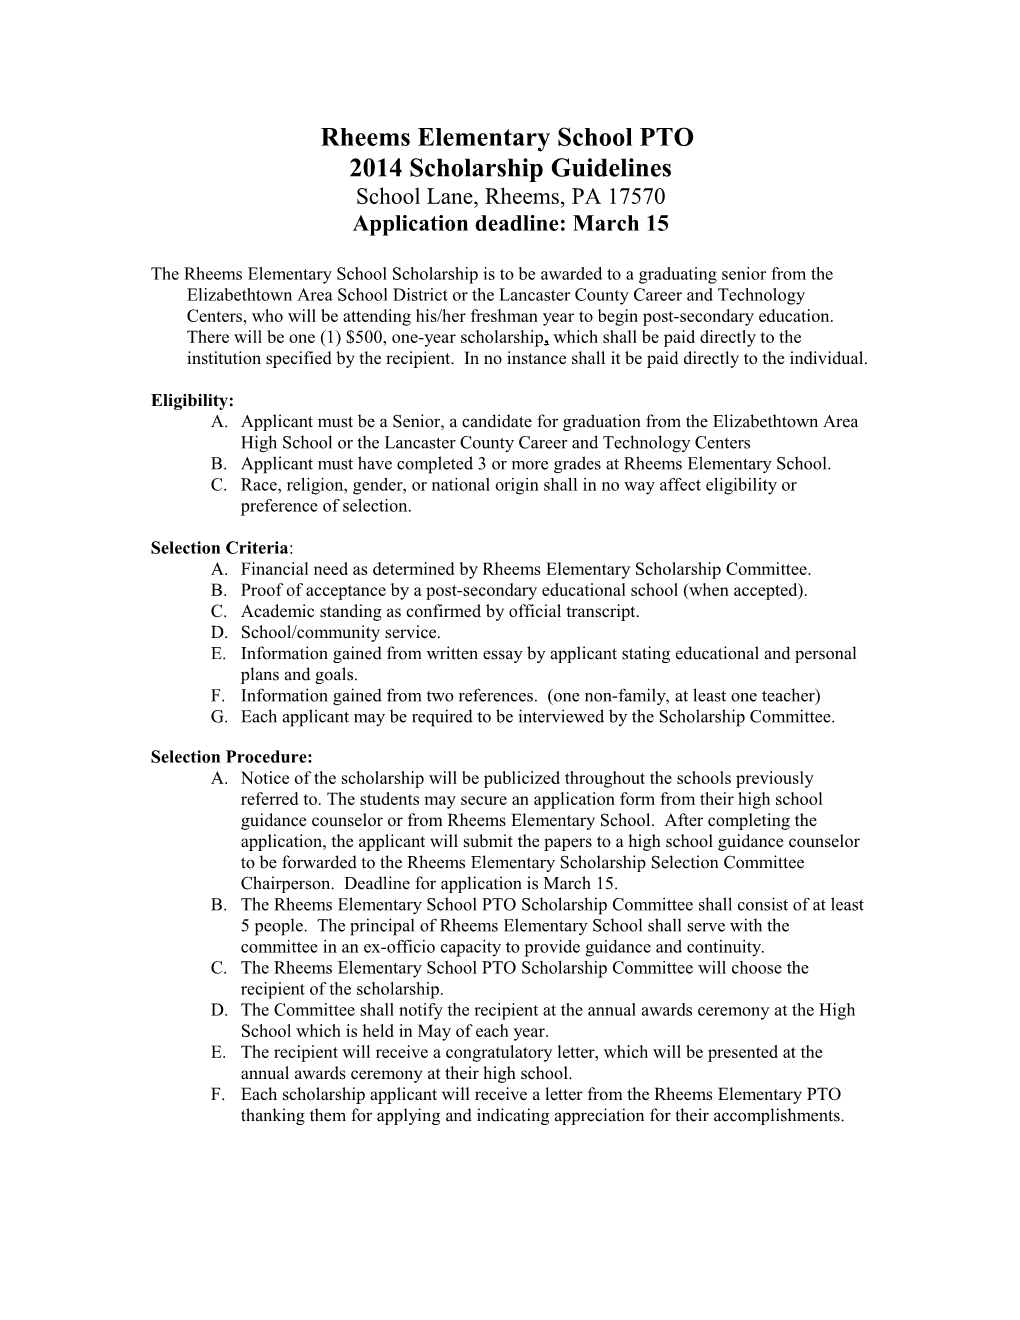 Rheems Elementary School PTO Scholarship Guidelines